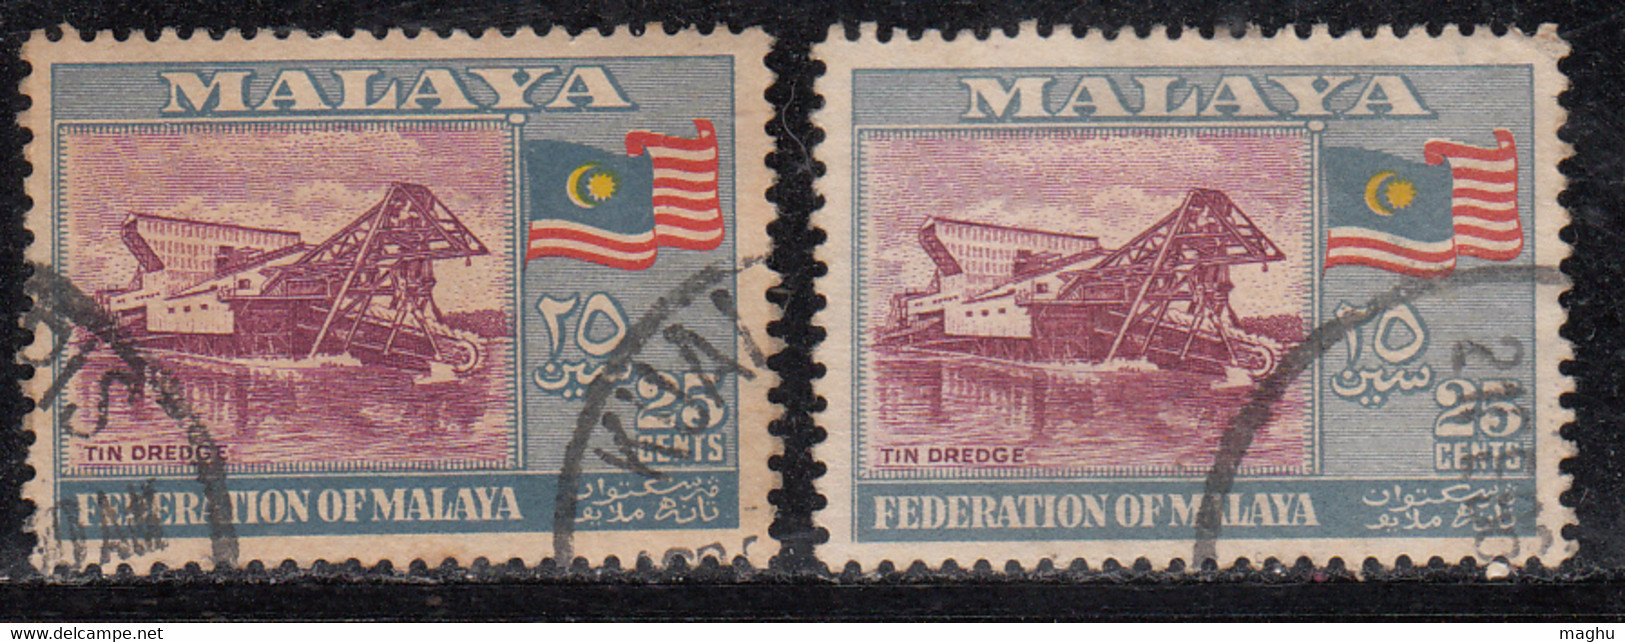 2 Diff., Colour Diff/ Dry Print Variety, Malaysia Used 1957, 25c Tin Dredger, Mineral - Fédération De Malaya